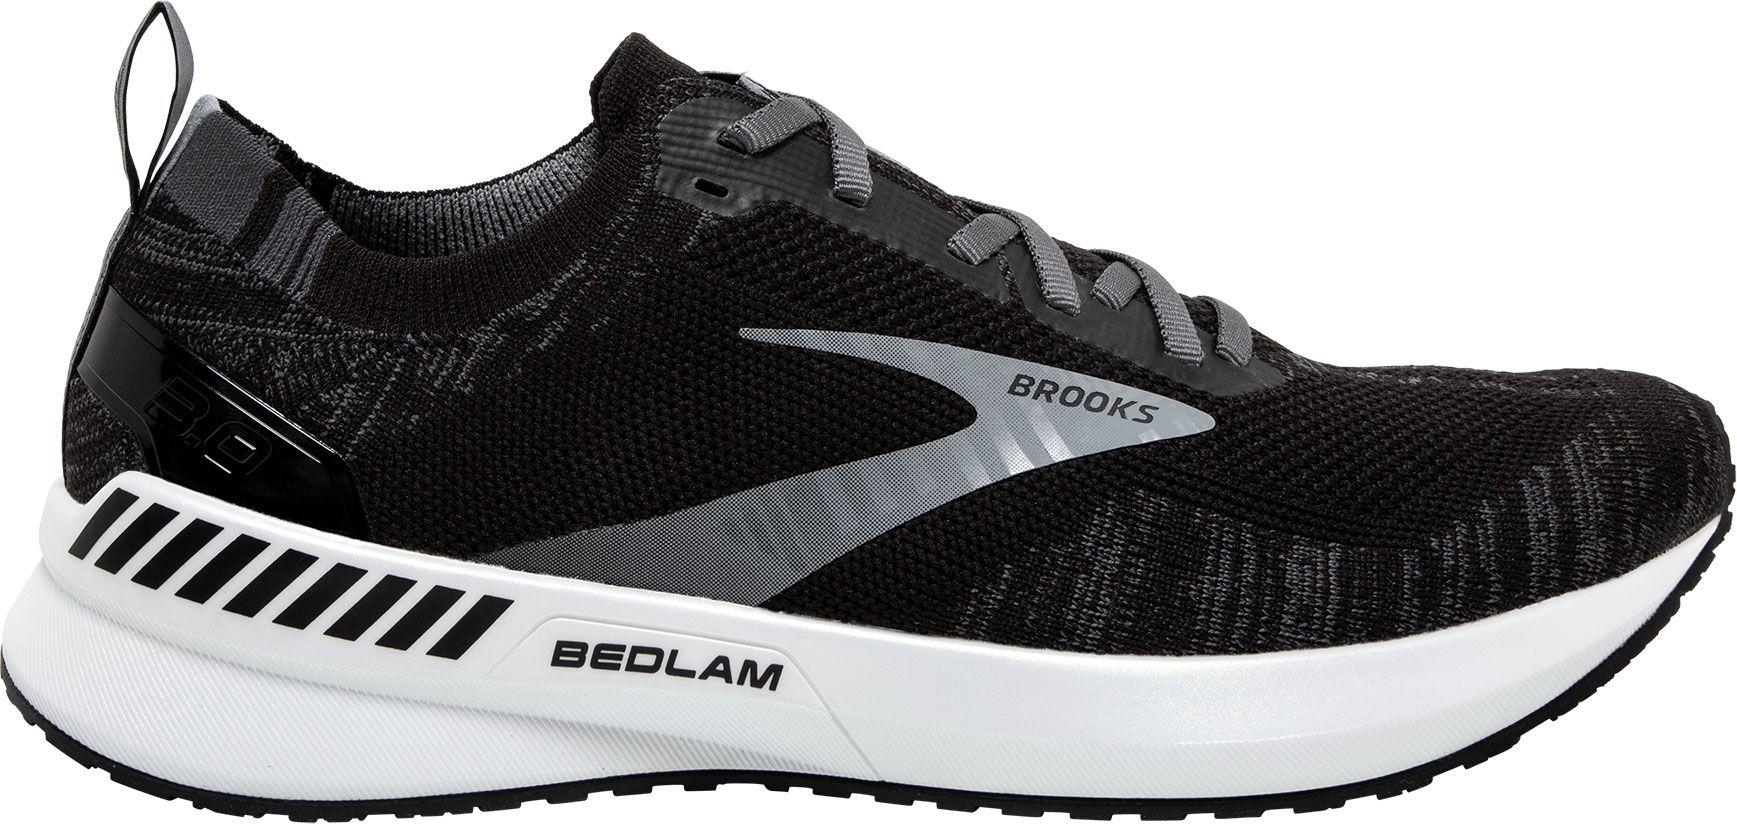 brooks women's bedlam running shoes